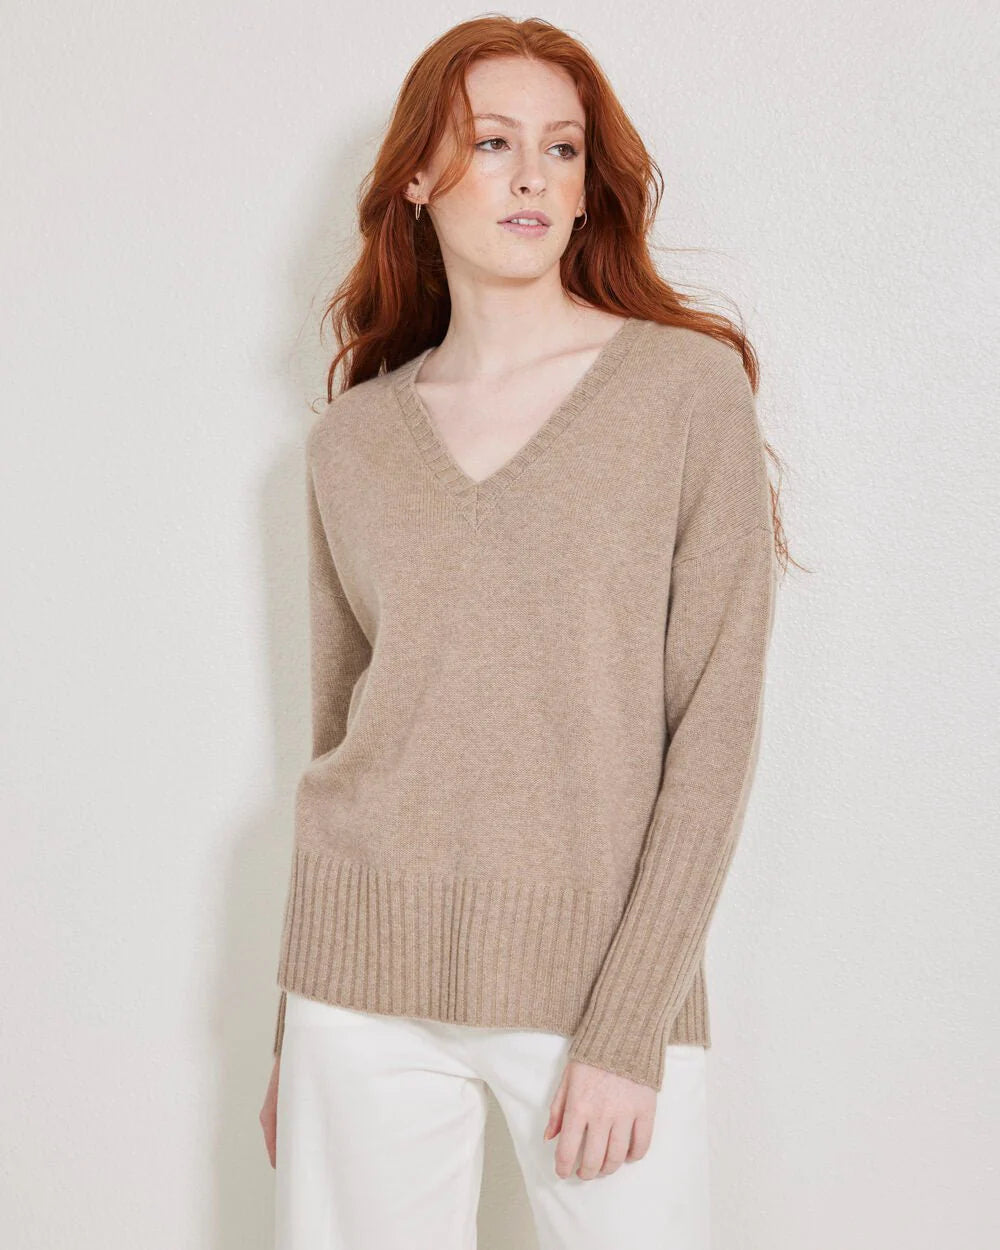 No0067 Cashmere V-Neck Sweater - Latte